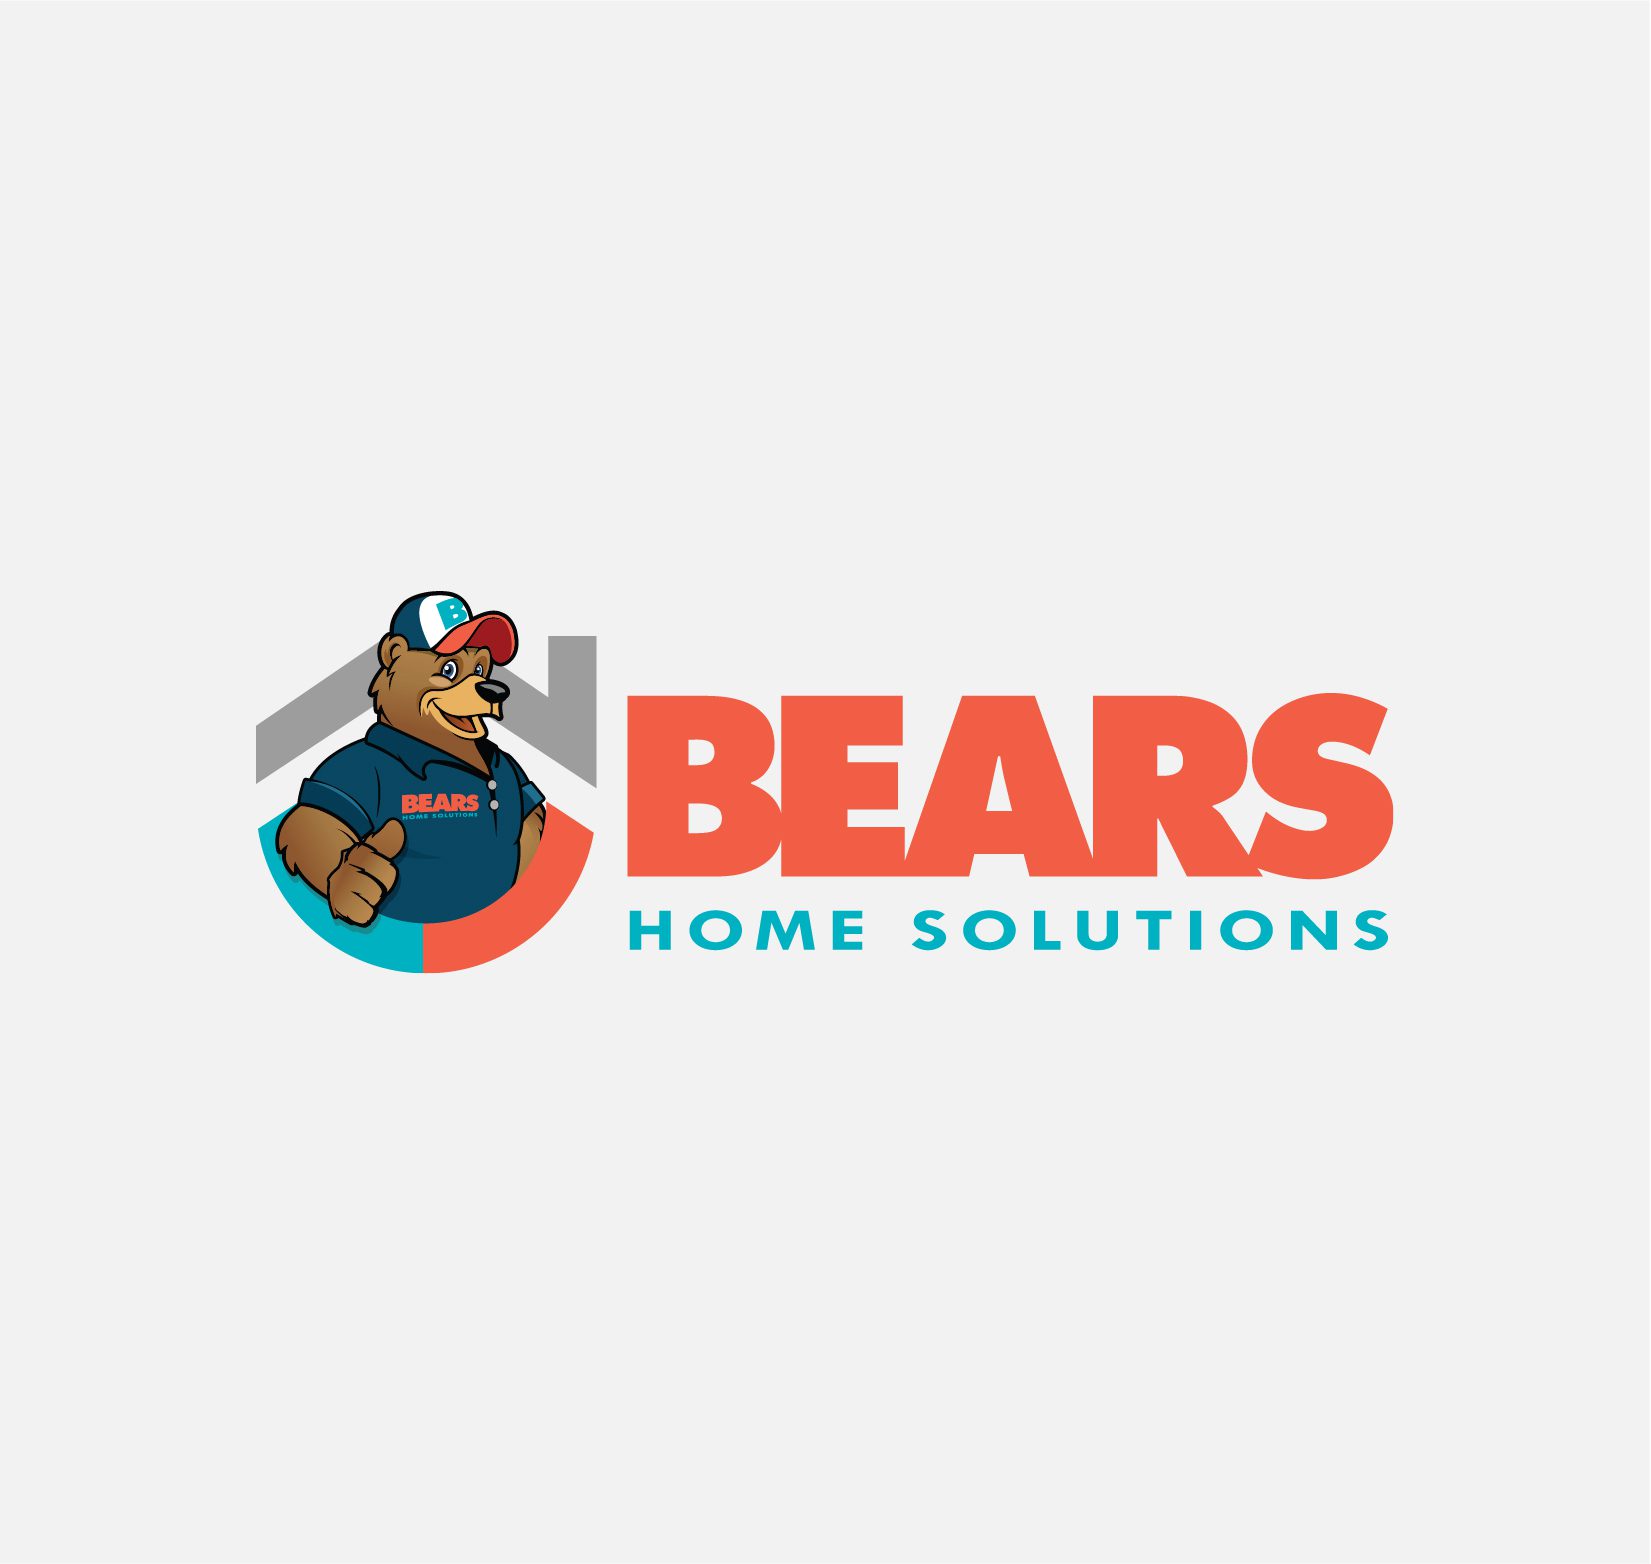 Bears Home Solutions logo